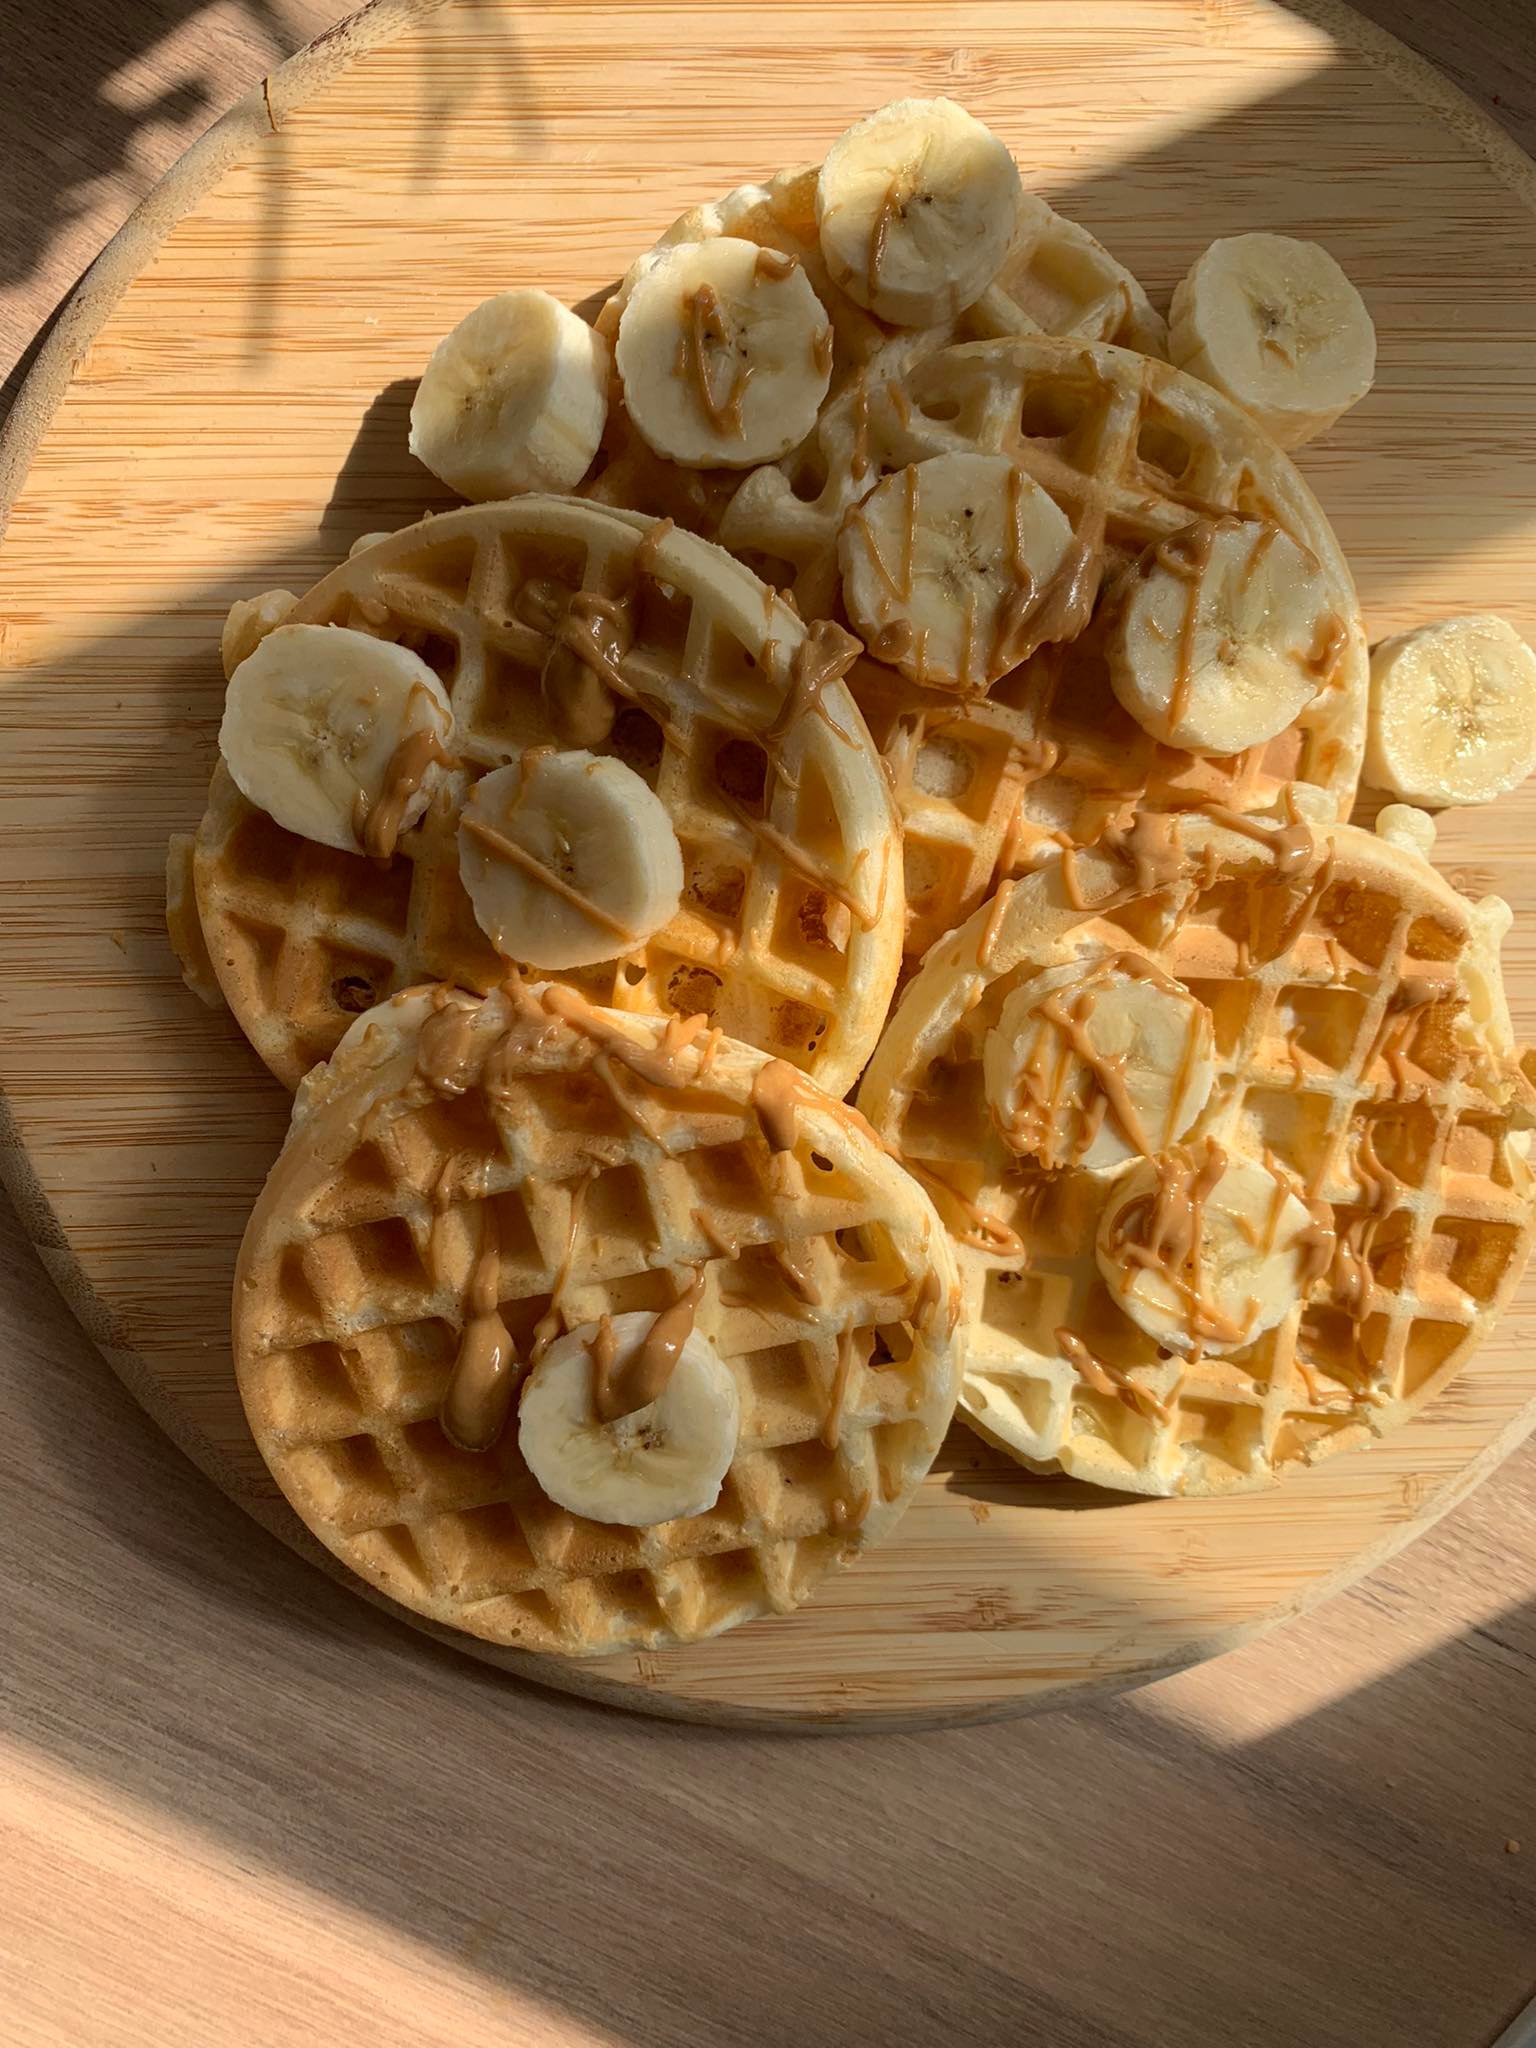 Mini Waffles - Your Diet Plan